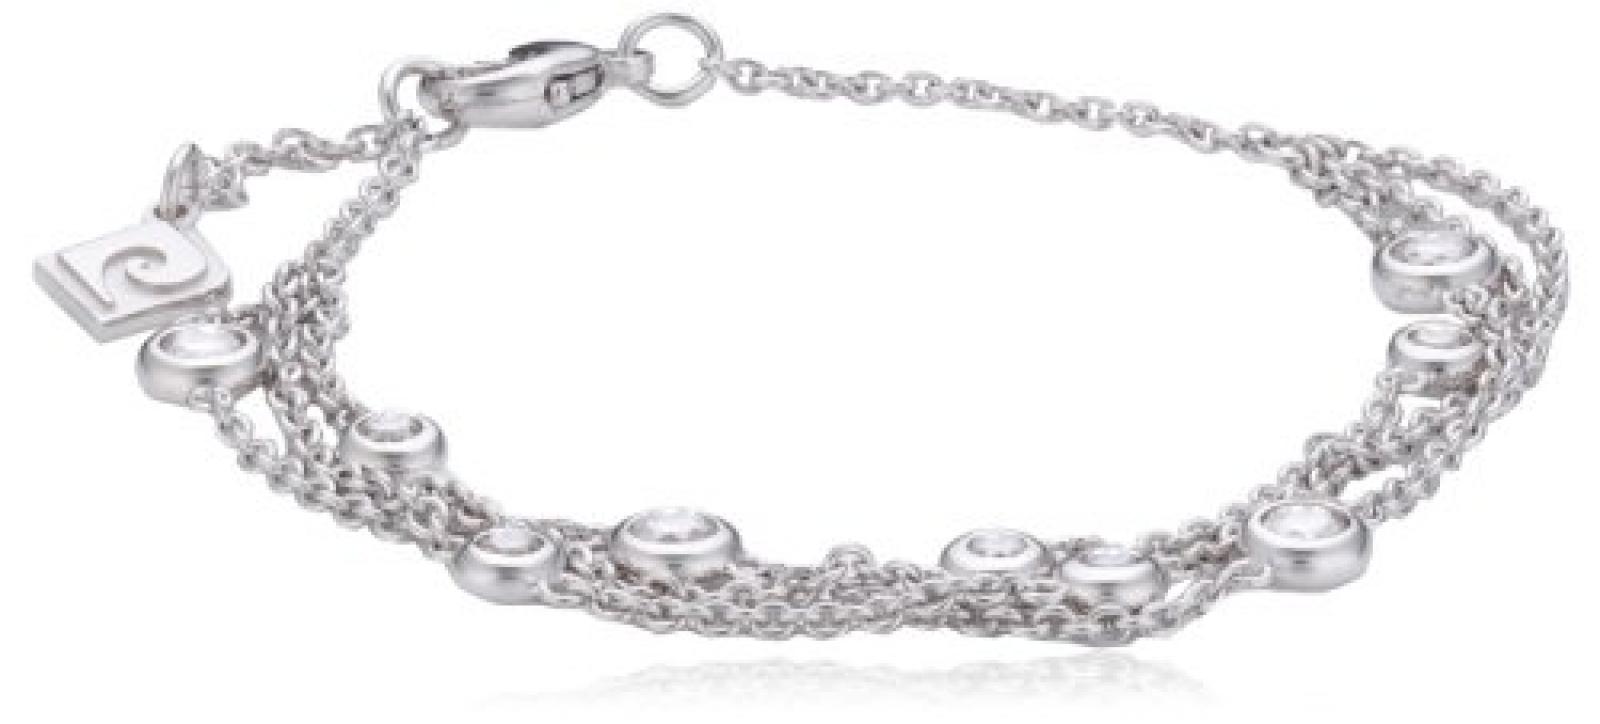 Pierre Cardin Damen Armband 925 Sterling Silber rhodiniert Kristall Zirkonia Poussières détoiles 17 cm weiß PCBR90126A170 